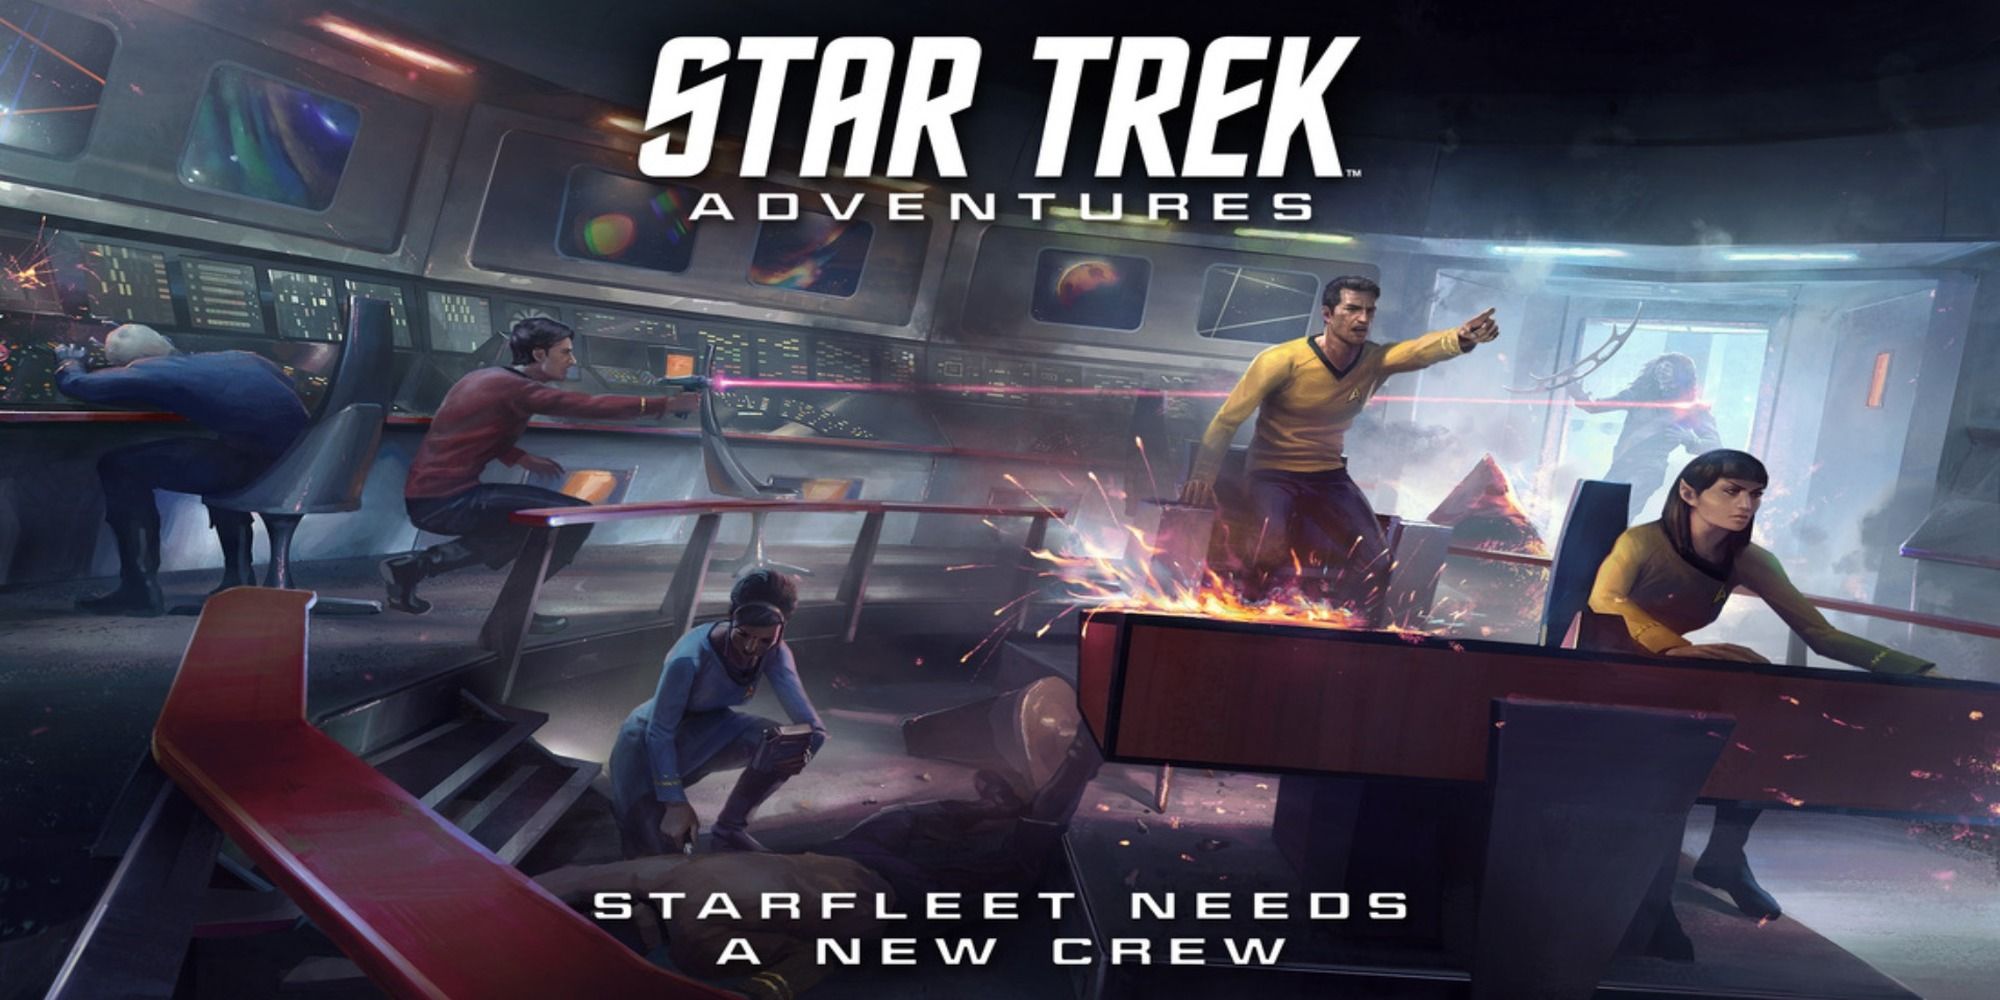 Star Trek Adventures tabletop game image showing the bridge crew in a dangerous situation